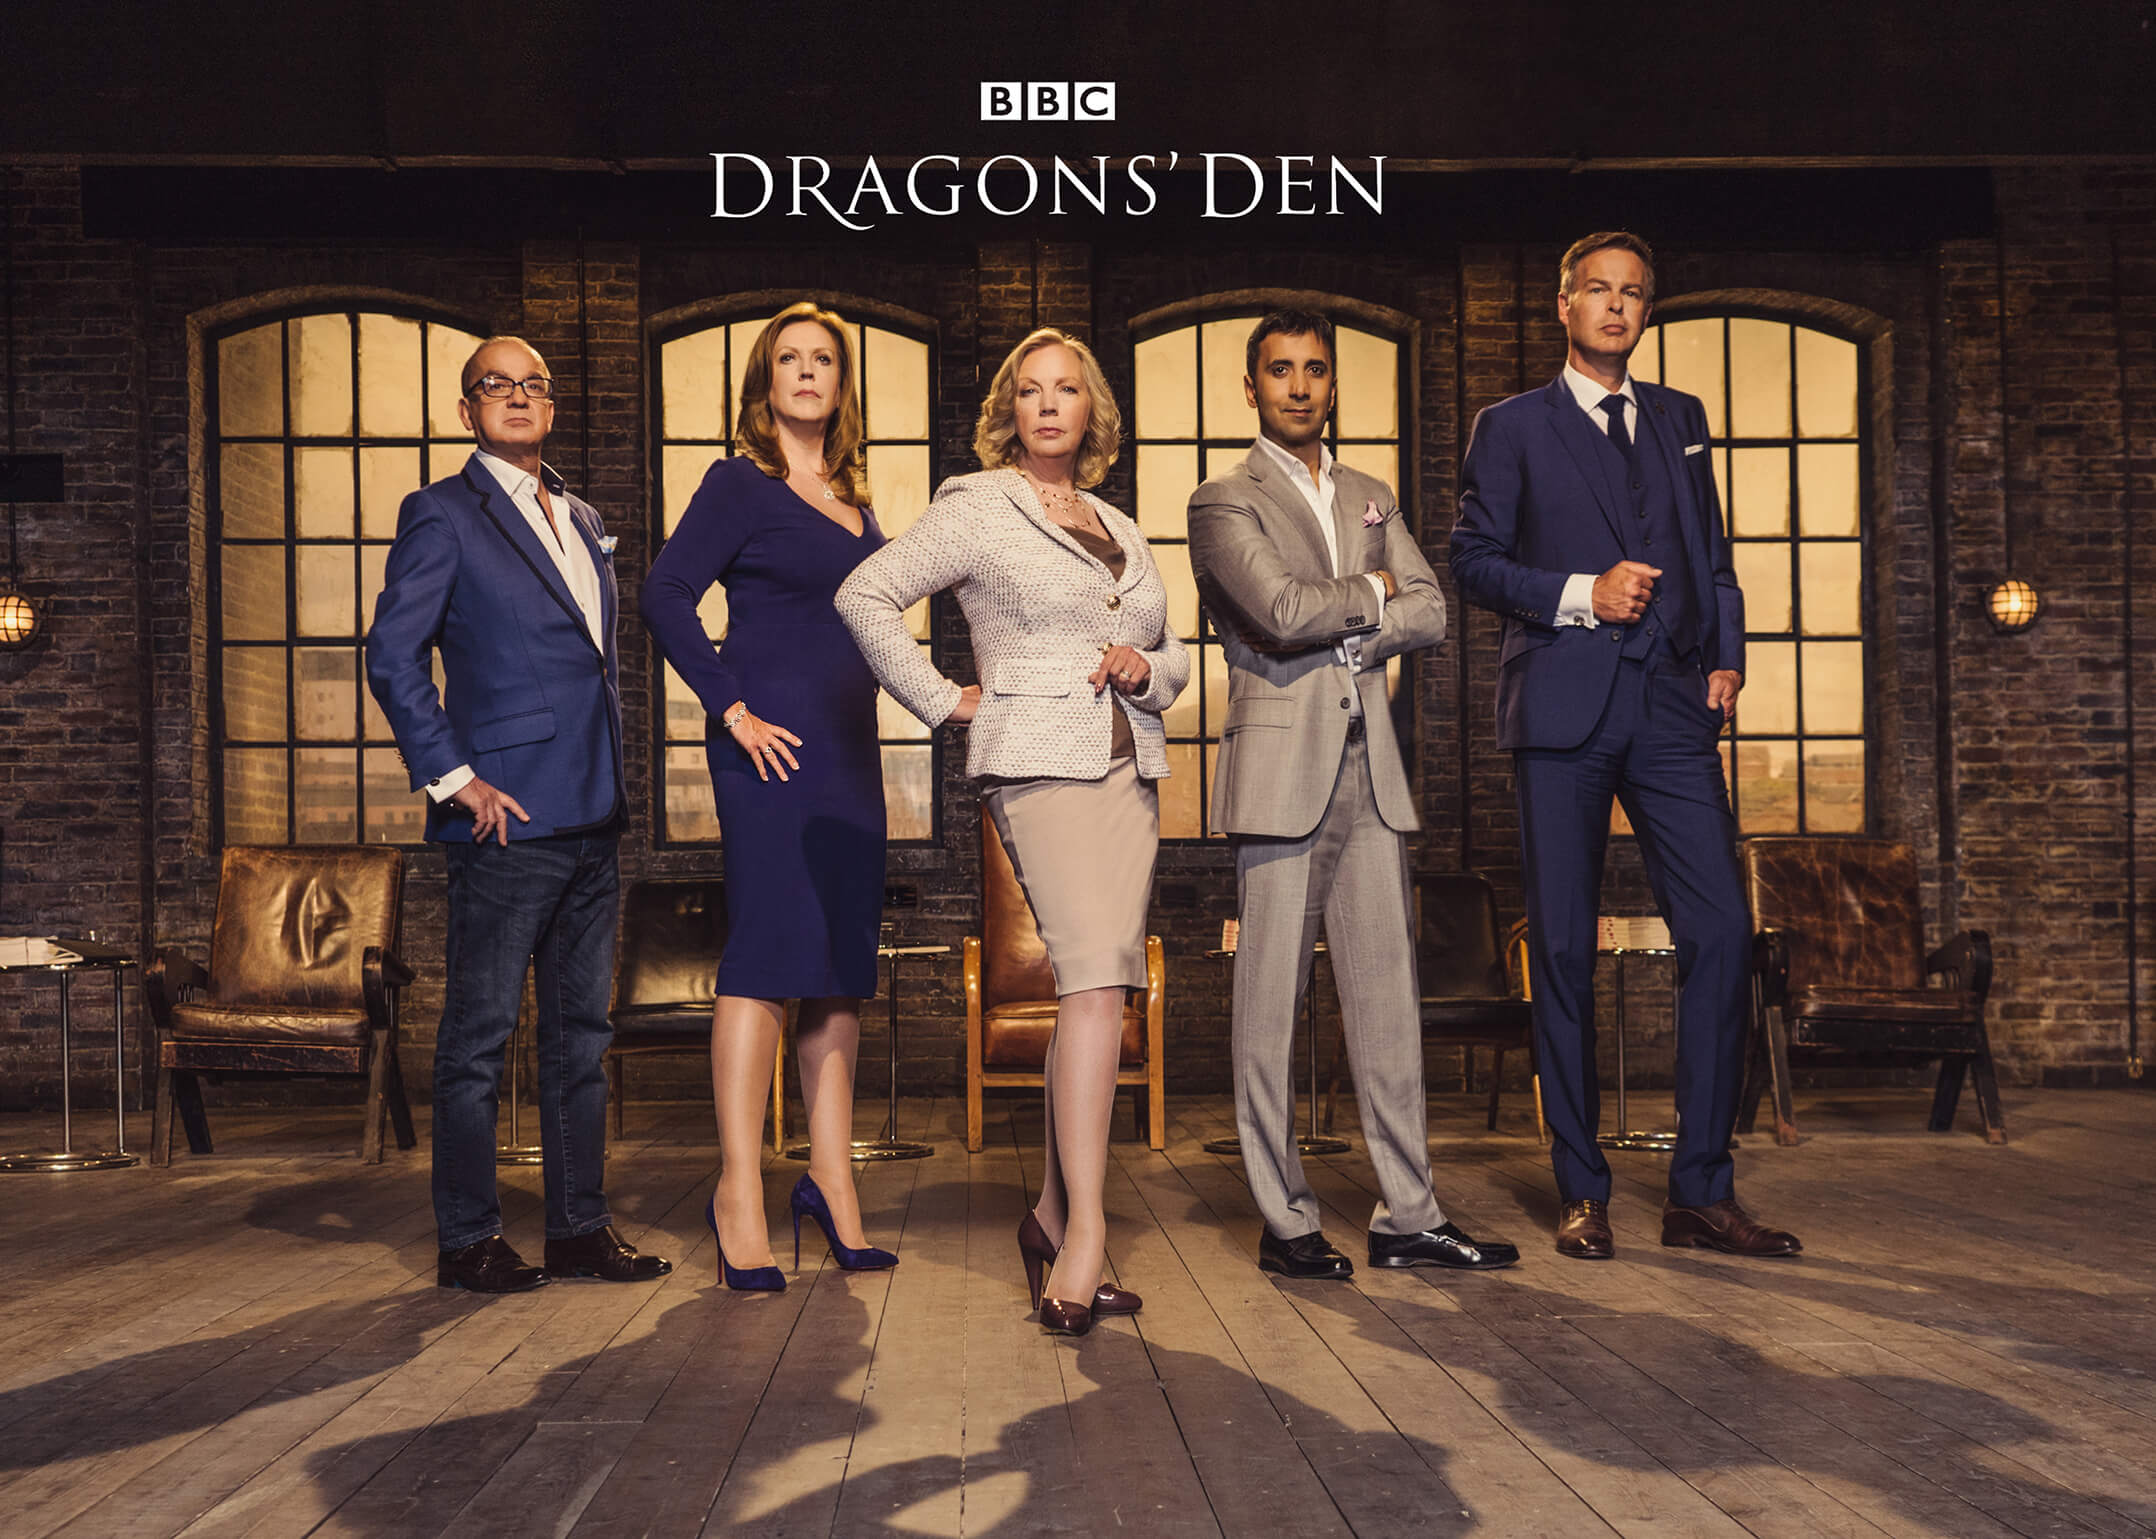 BBC show Dragon's Den - Series 15